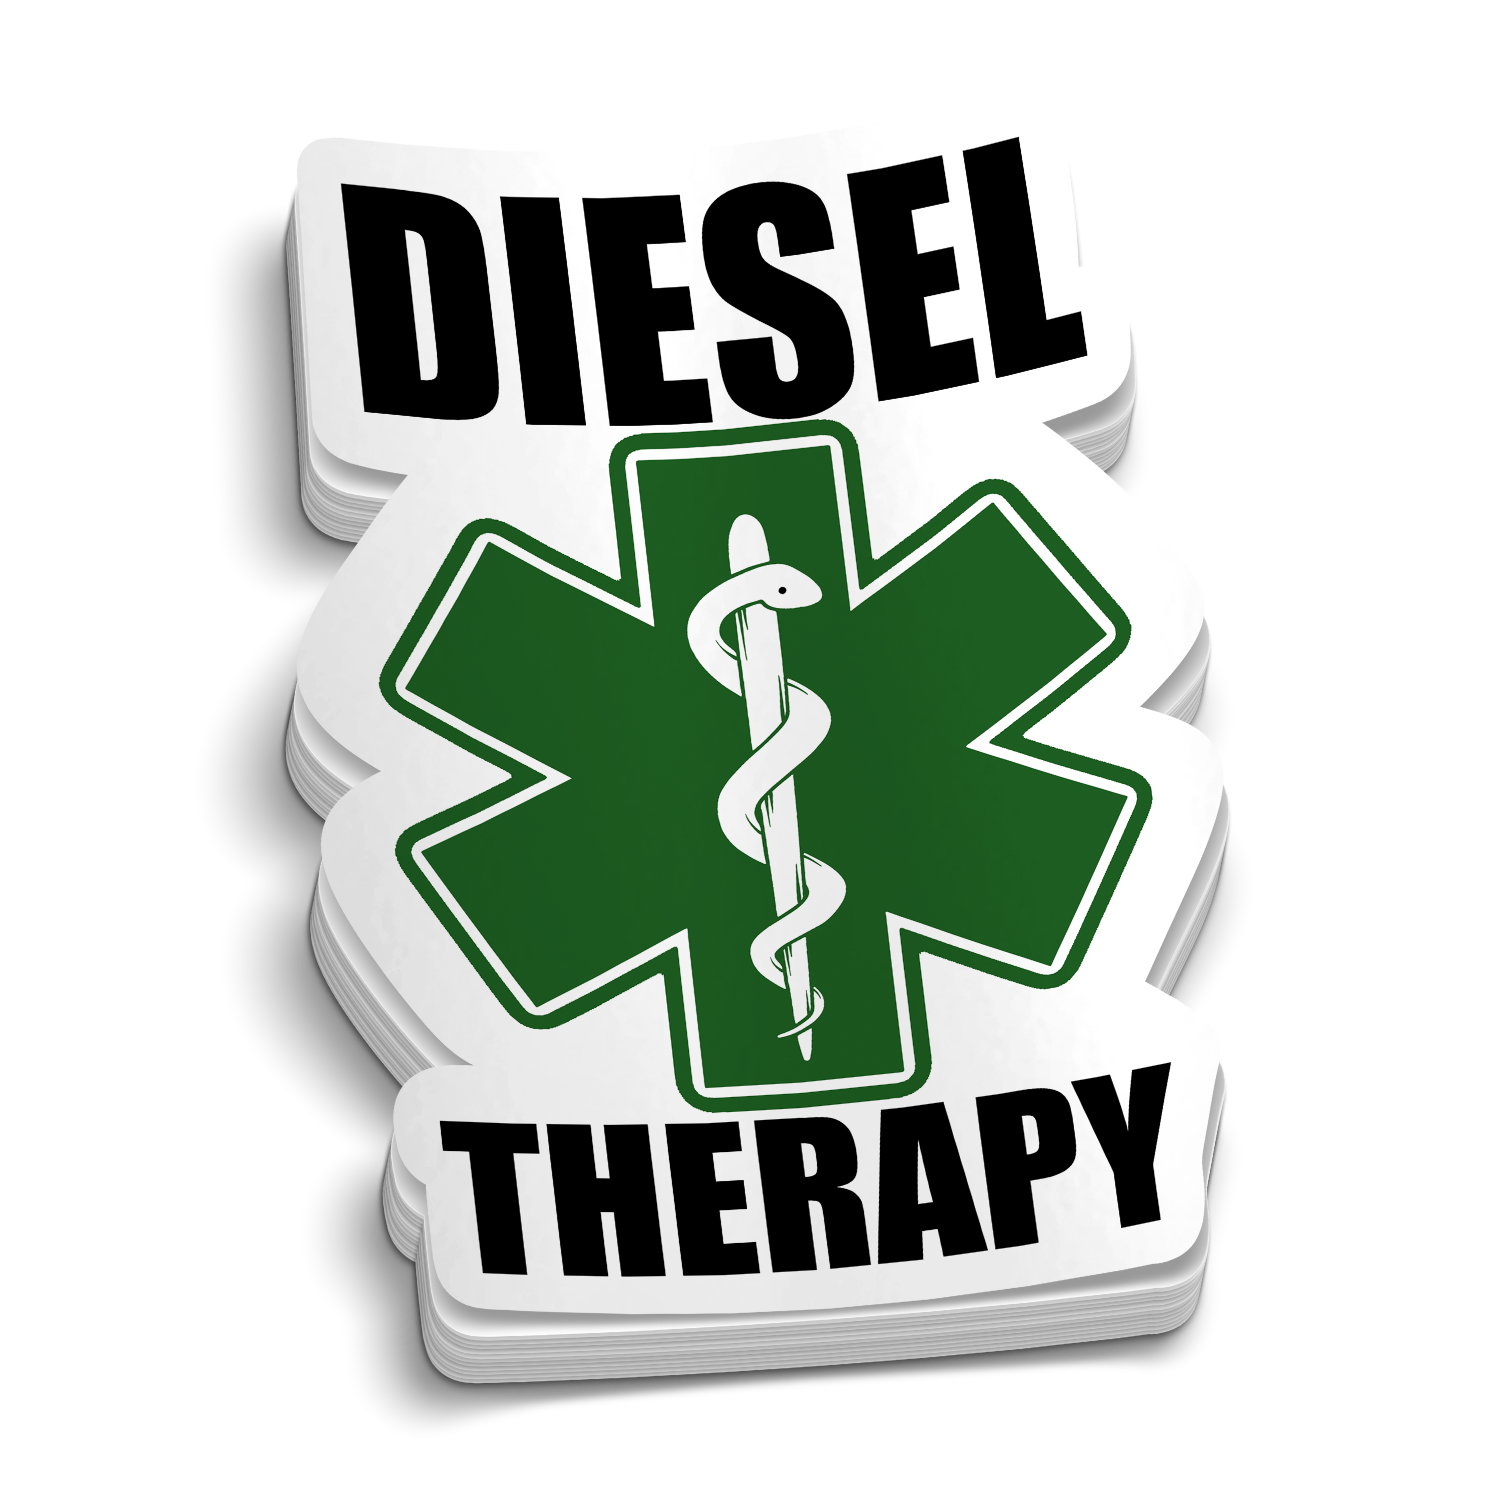 Diesel Therapy Sticker